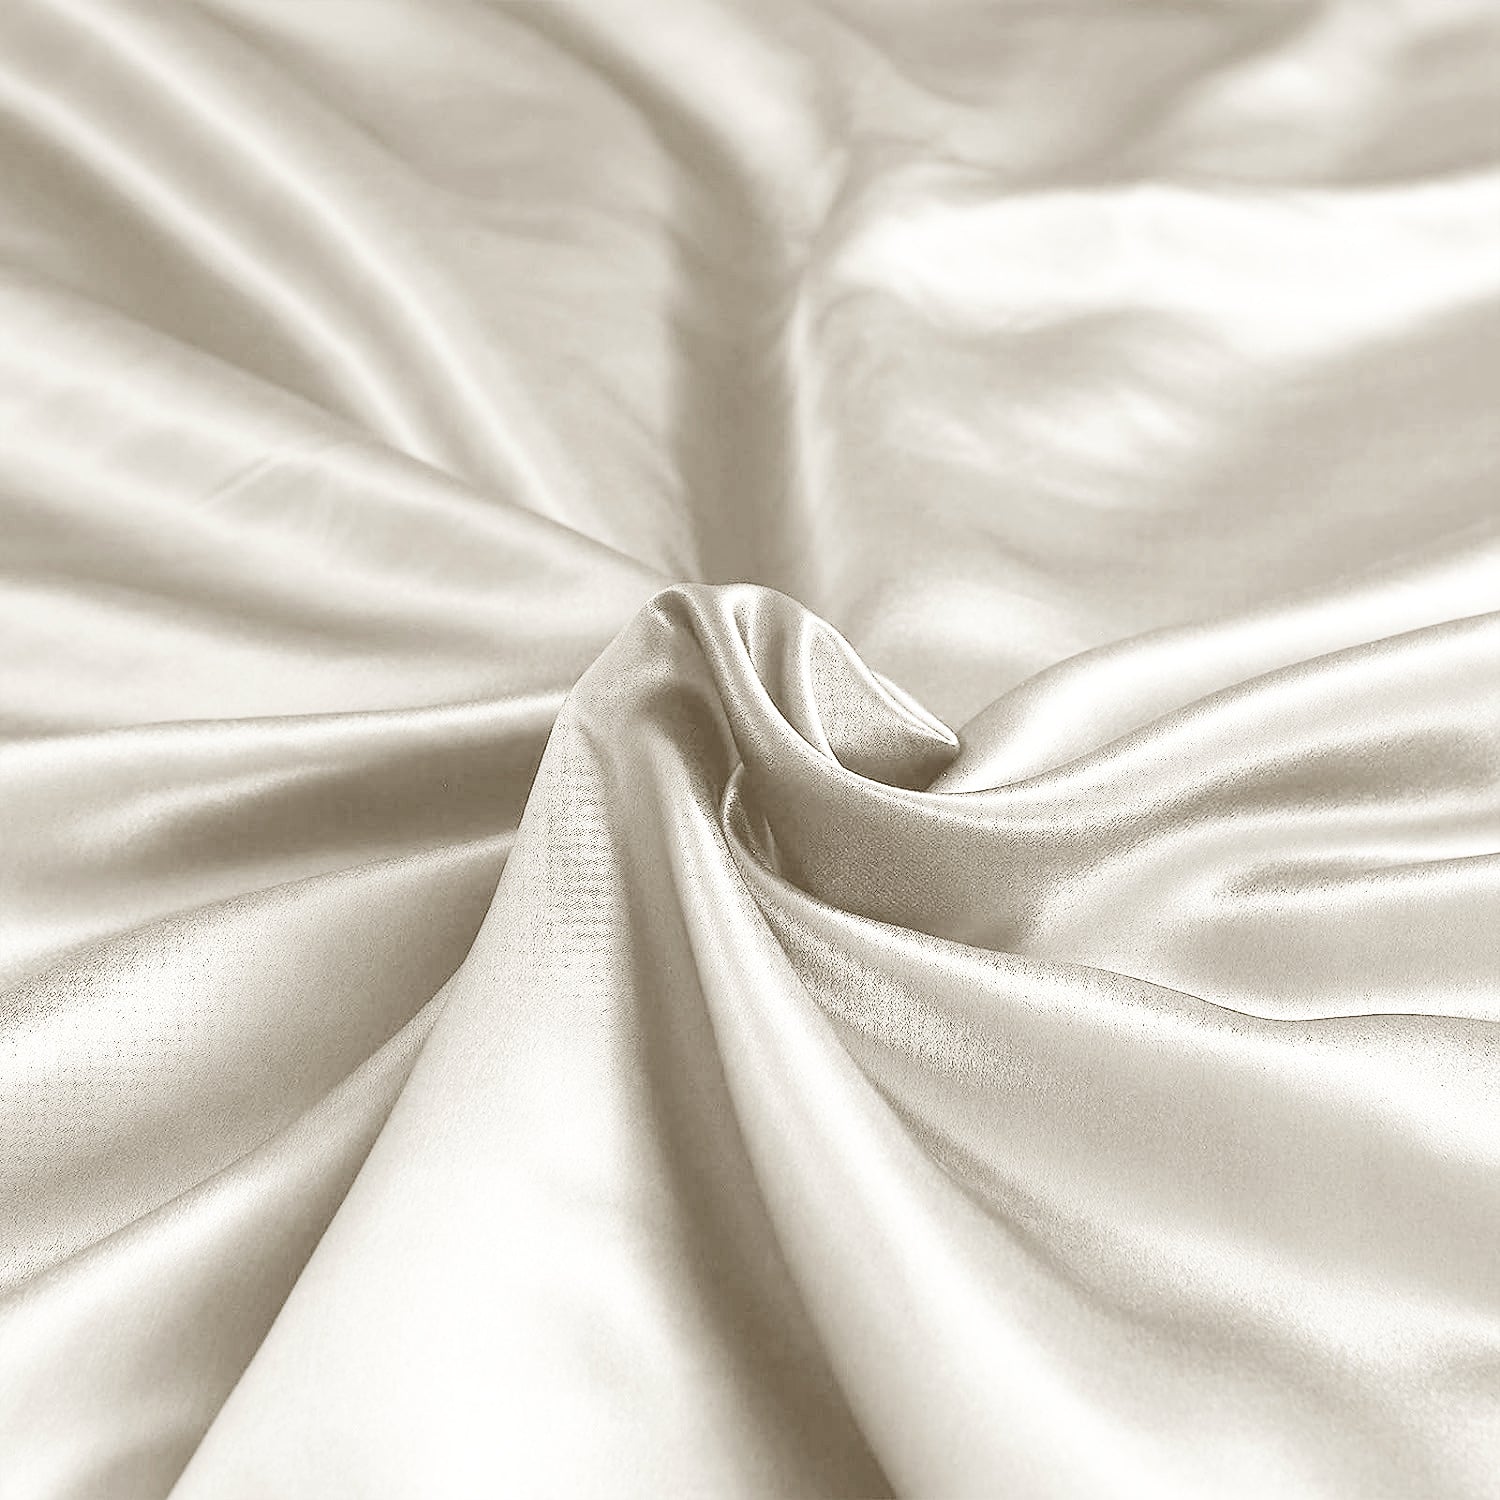 Ivory Satin Silk Pillowcases Pair